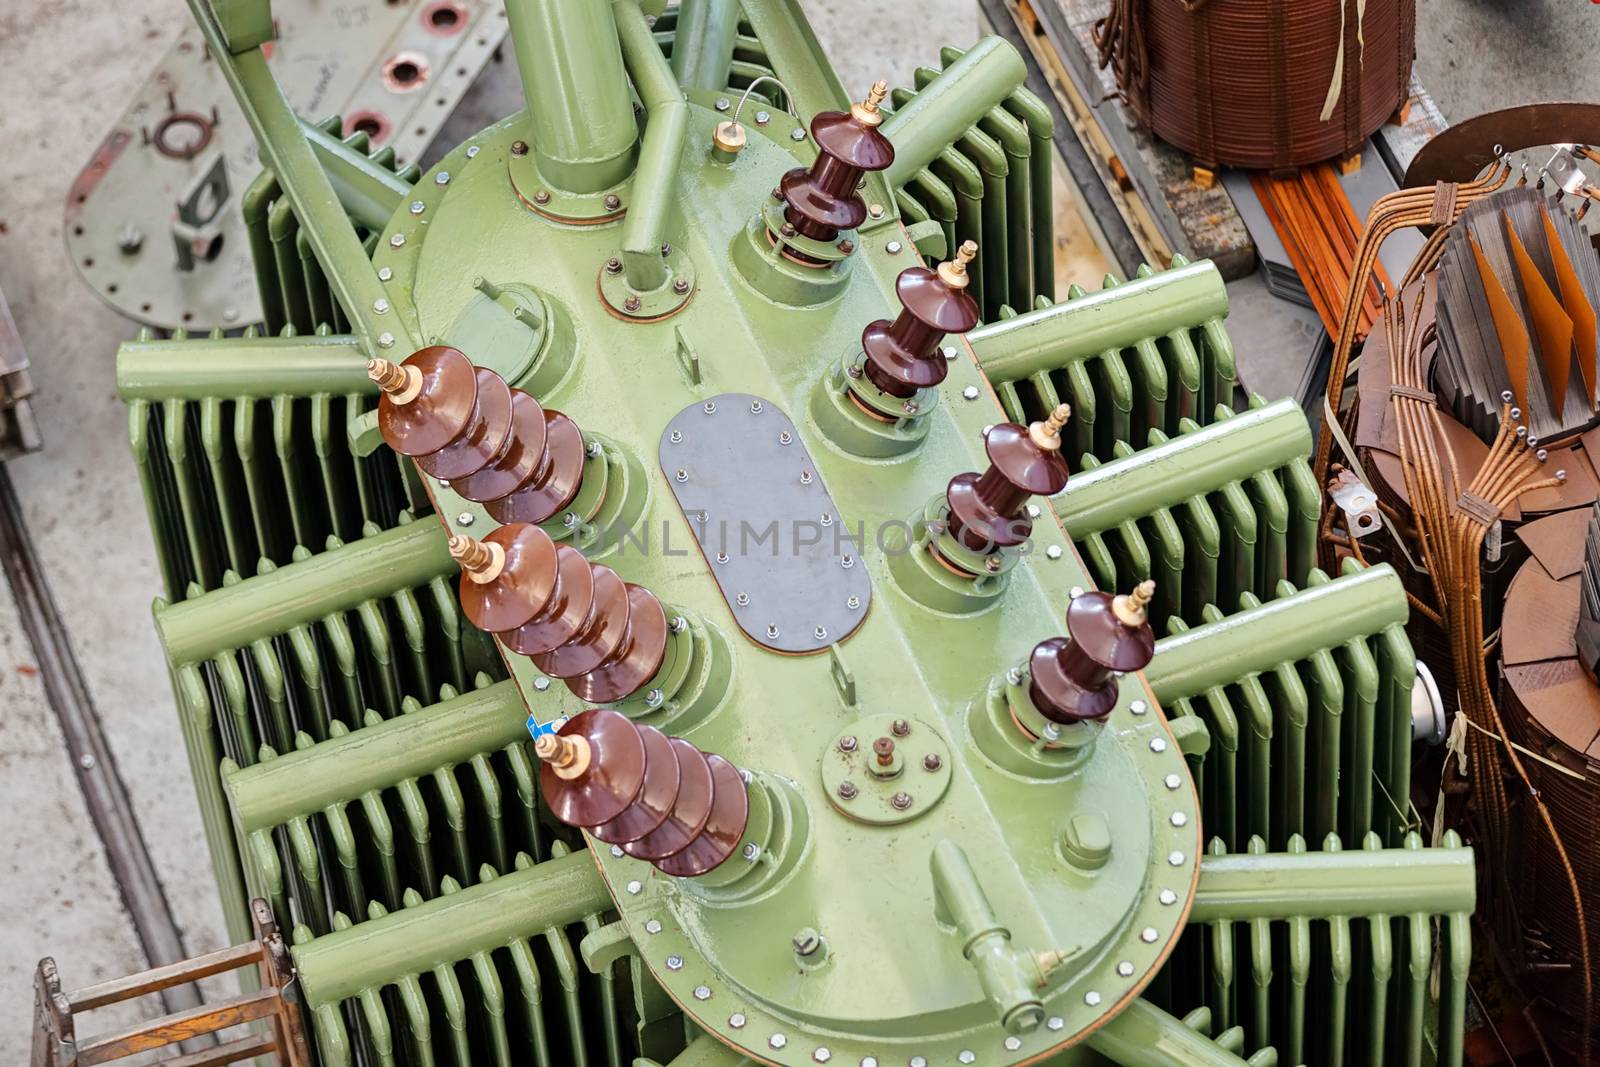 new high voltage transformer by vladimirnenezic